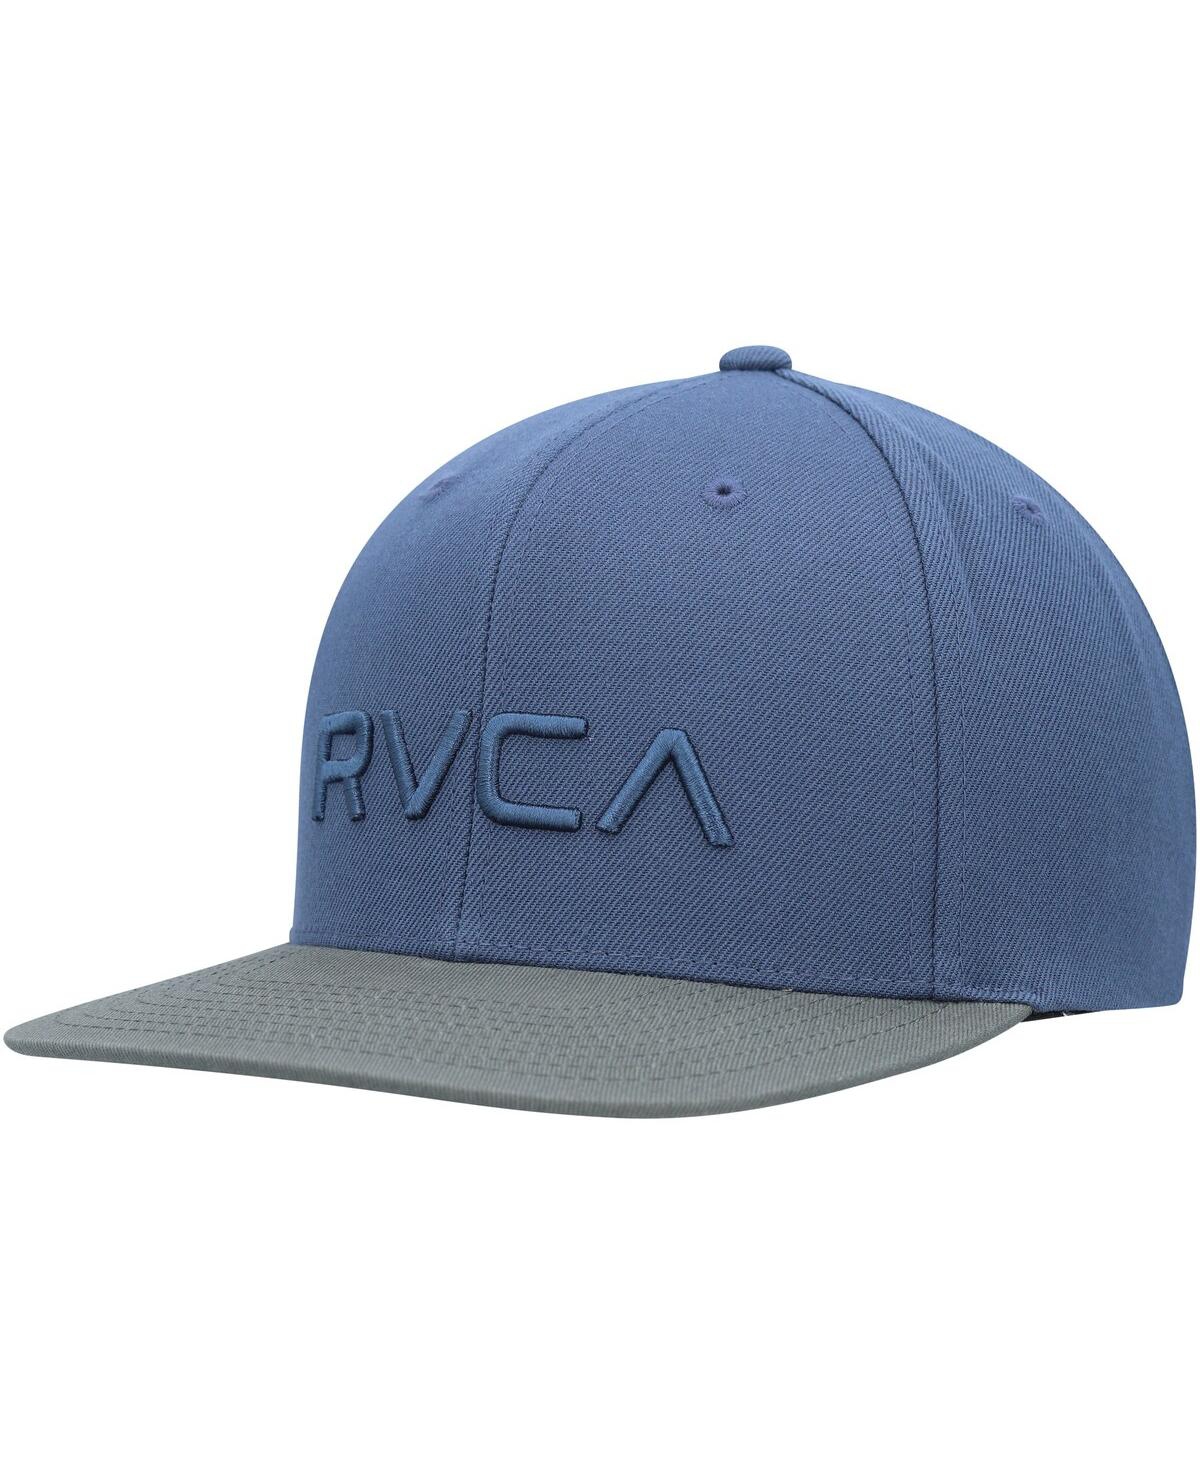 Men's Rvca Navy, Olive Twill Ii Snapback Hat - Navy, Olive